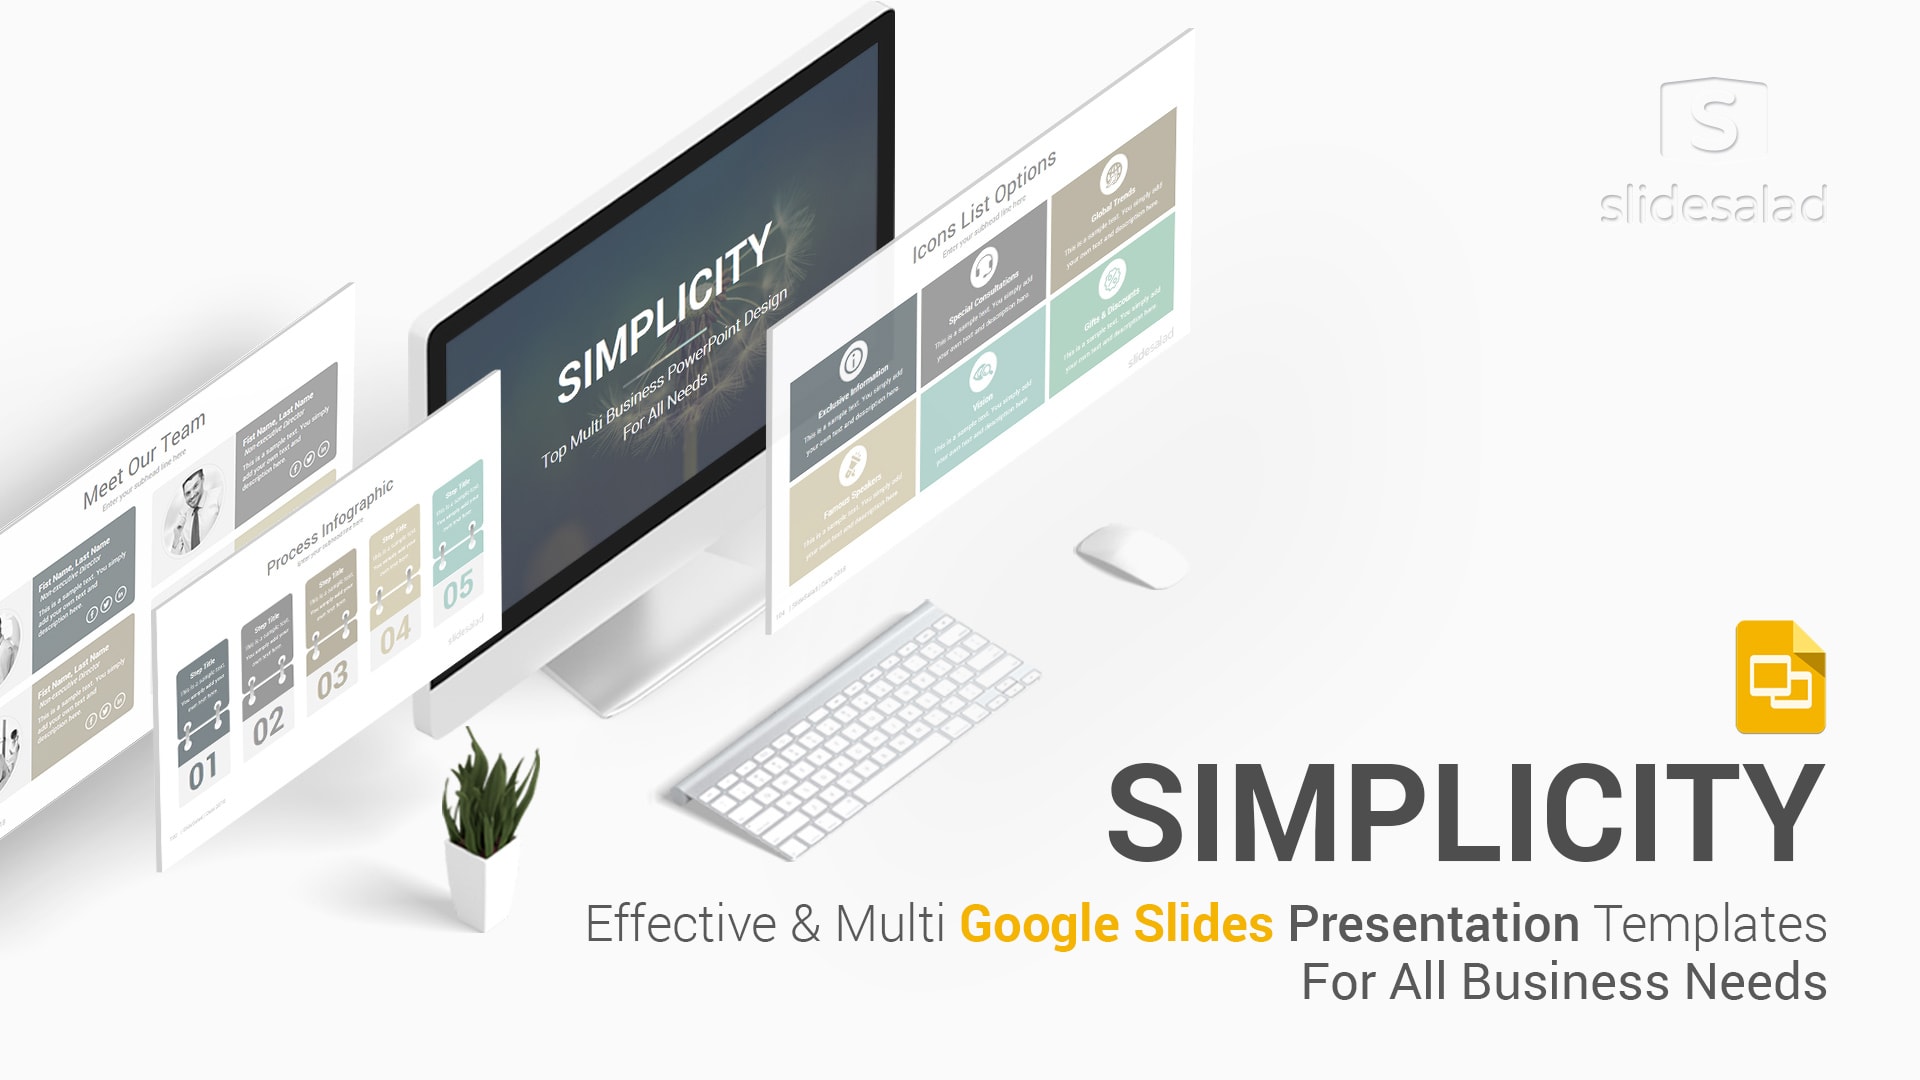 Simplicity Professional Business Google Slides Templates – Best Google Slides Templates Design for Business Presentations